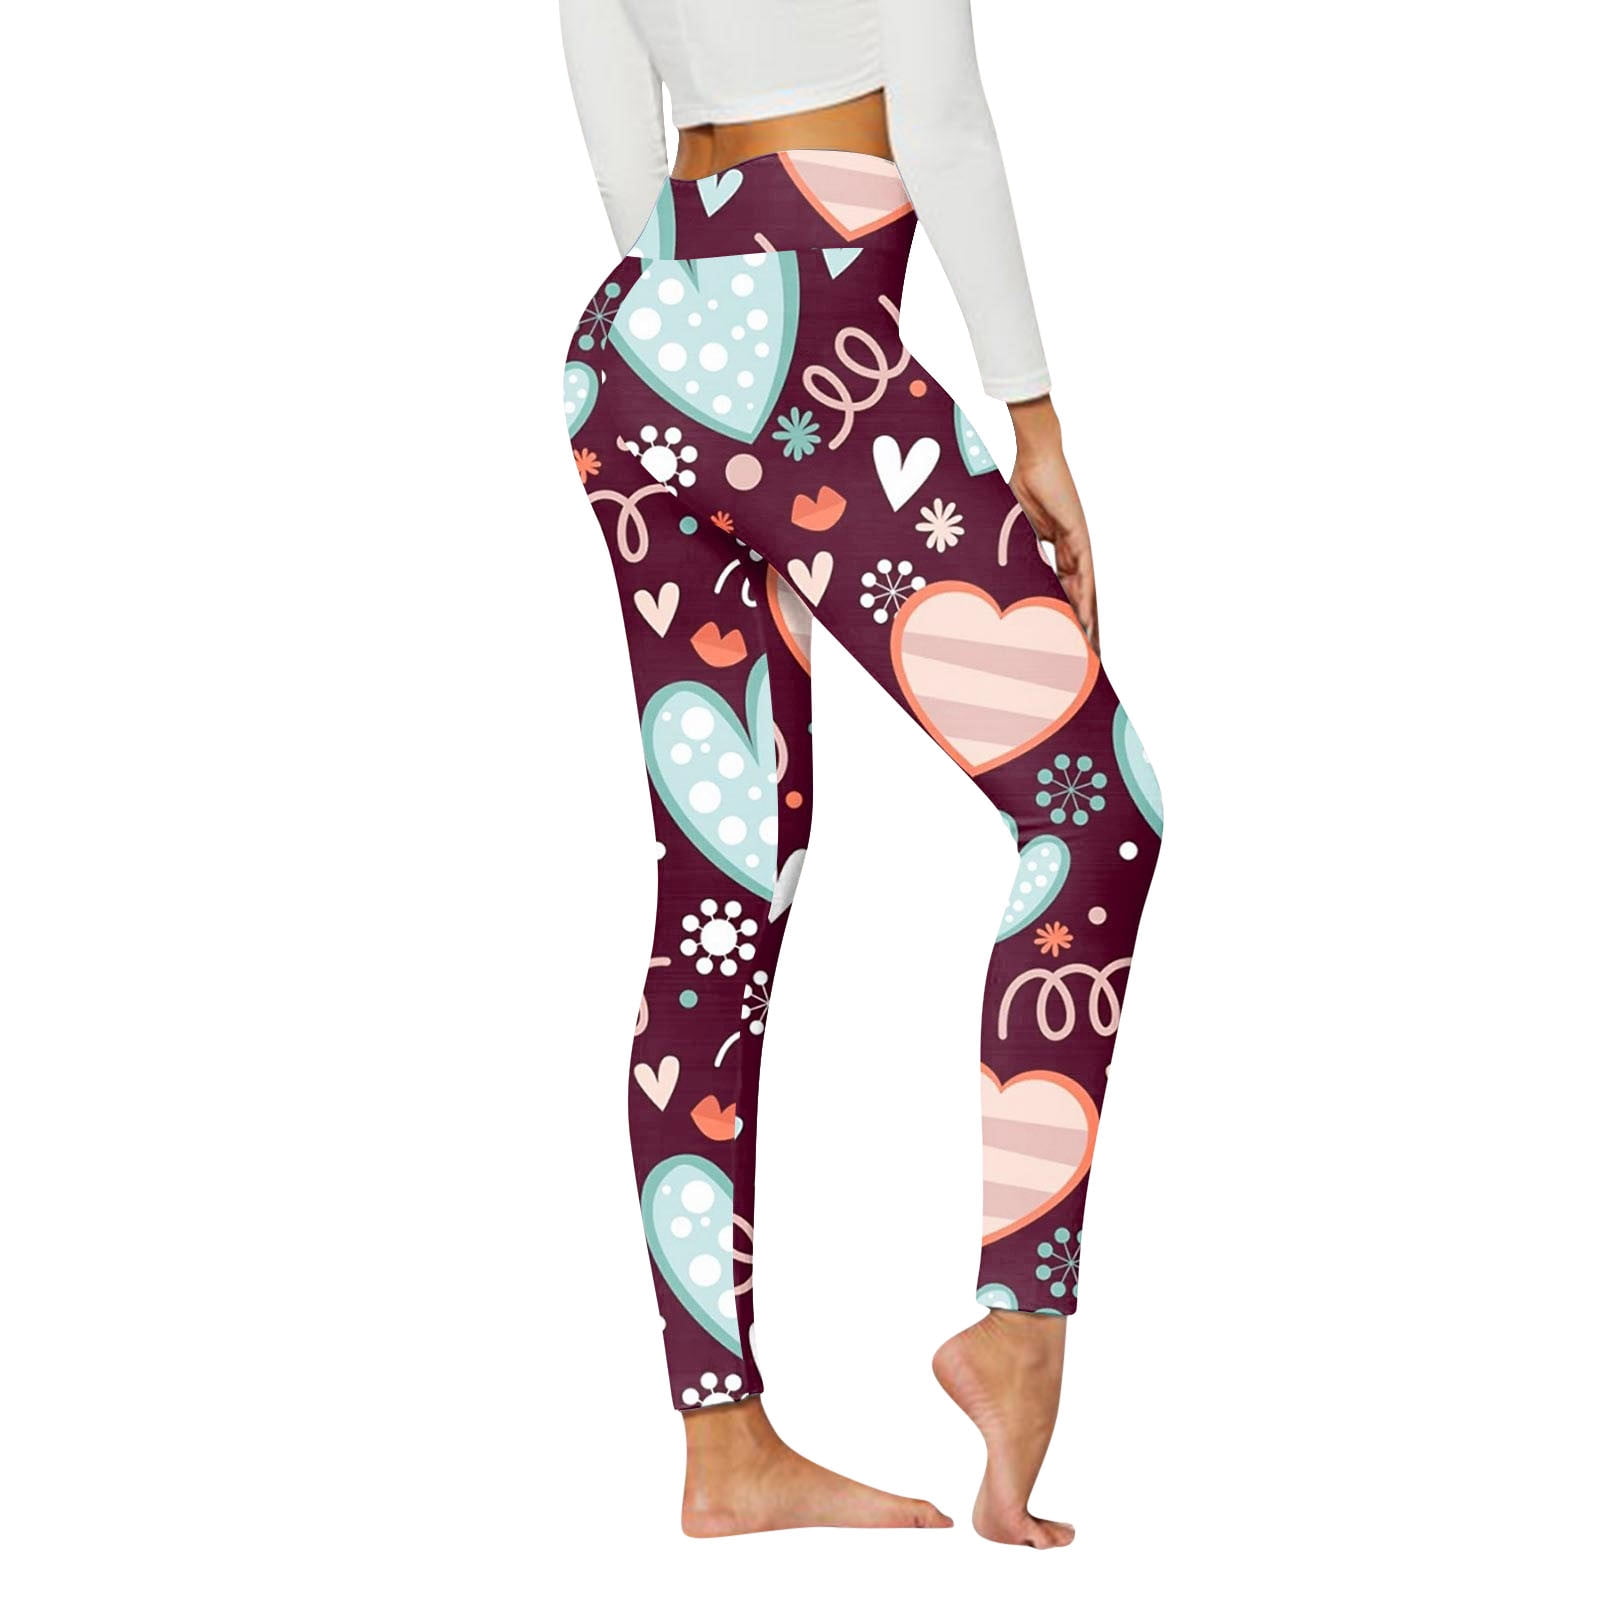 ASEIDFNSA Yoga Leggings With Pockets for Women Sheer Lingerie for Women  Pants & Top Women Yoga Leggings Valentine Day Printing Casual Comfortable  Home